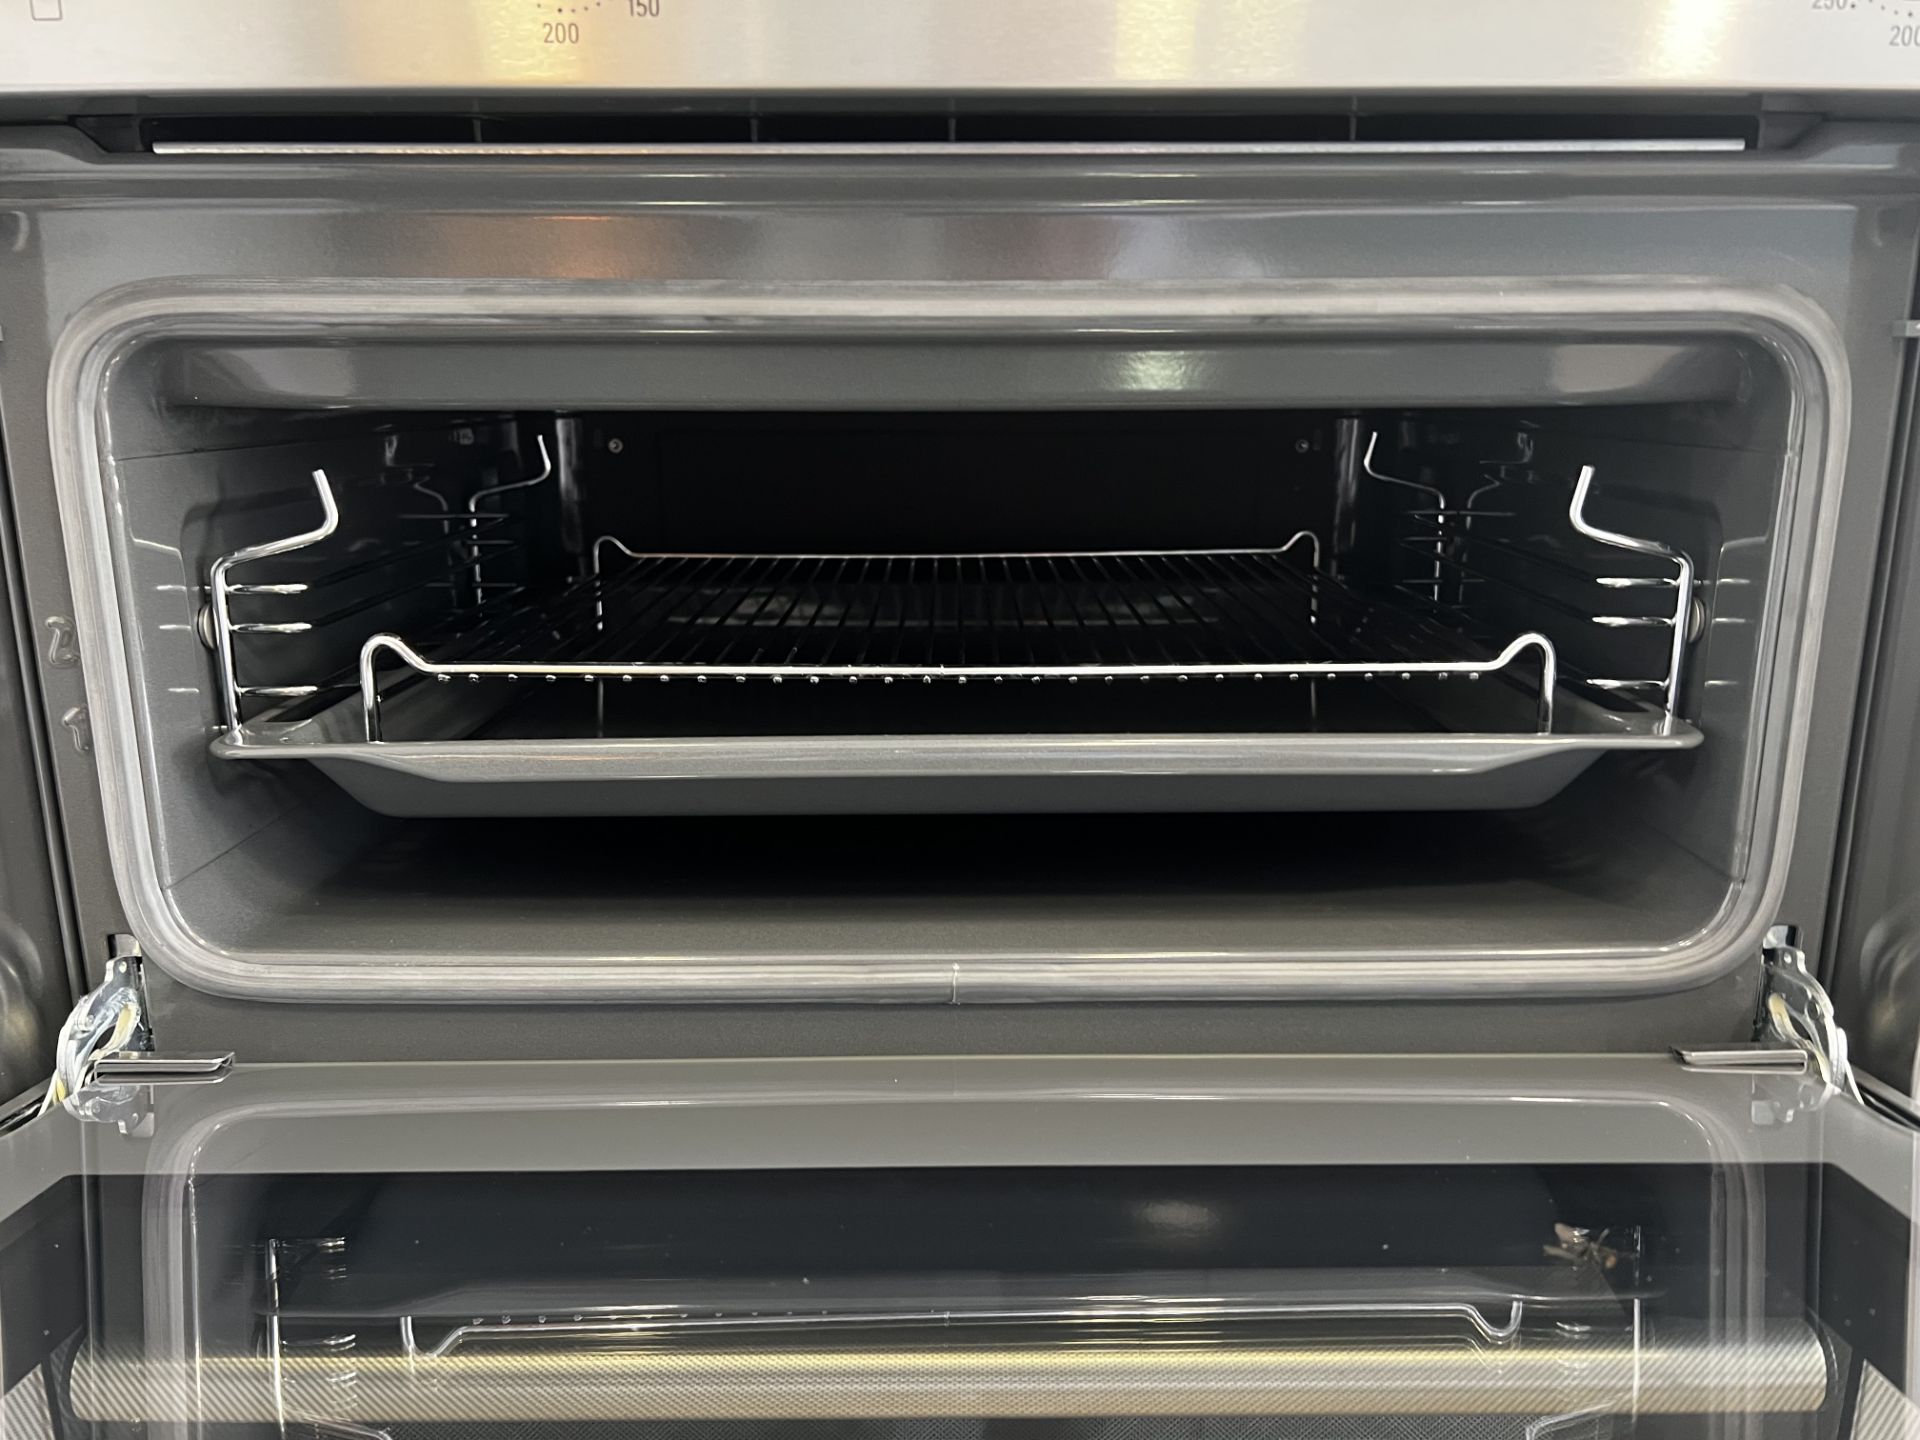 Siemens double oven/grill, type HBB-DP81-7 (built in) - Image 3 of 6